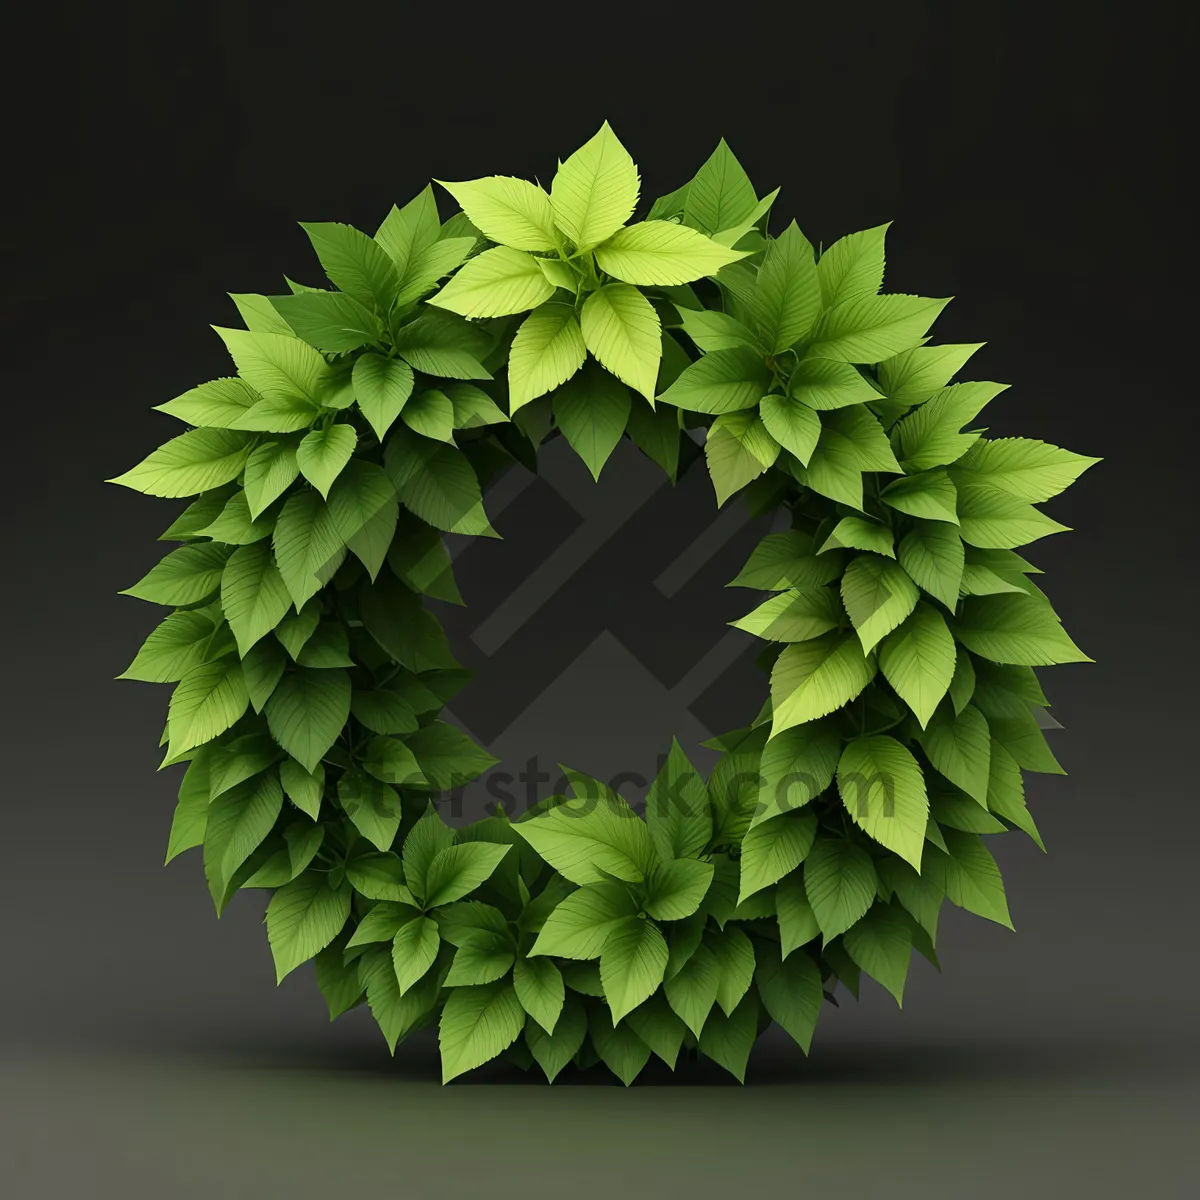 Picture of Lively Leafy Clover Design - Evergreen Spring Floral Decoration